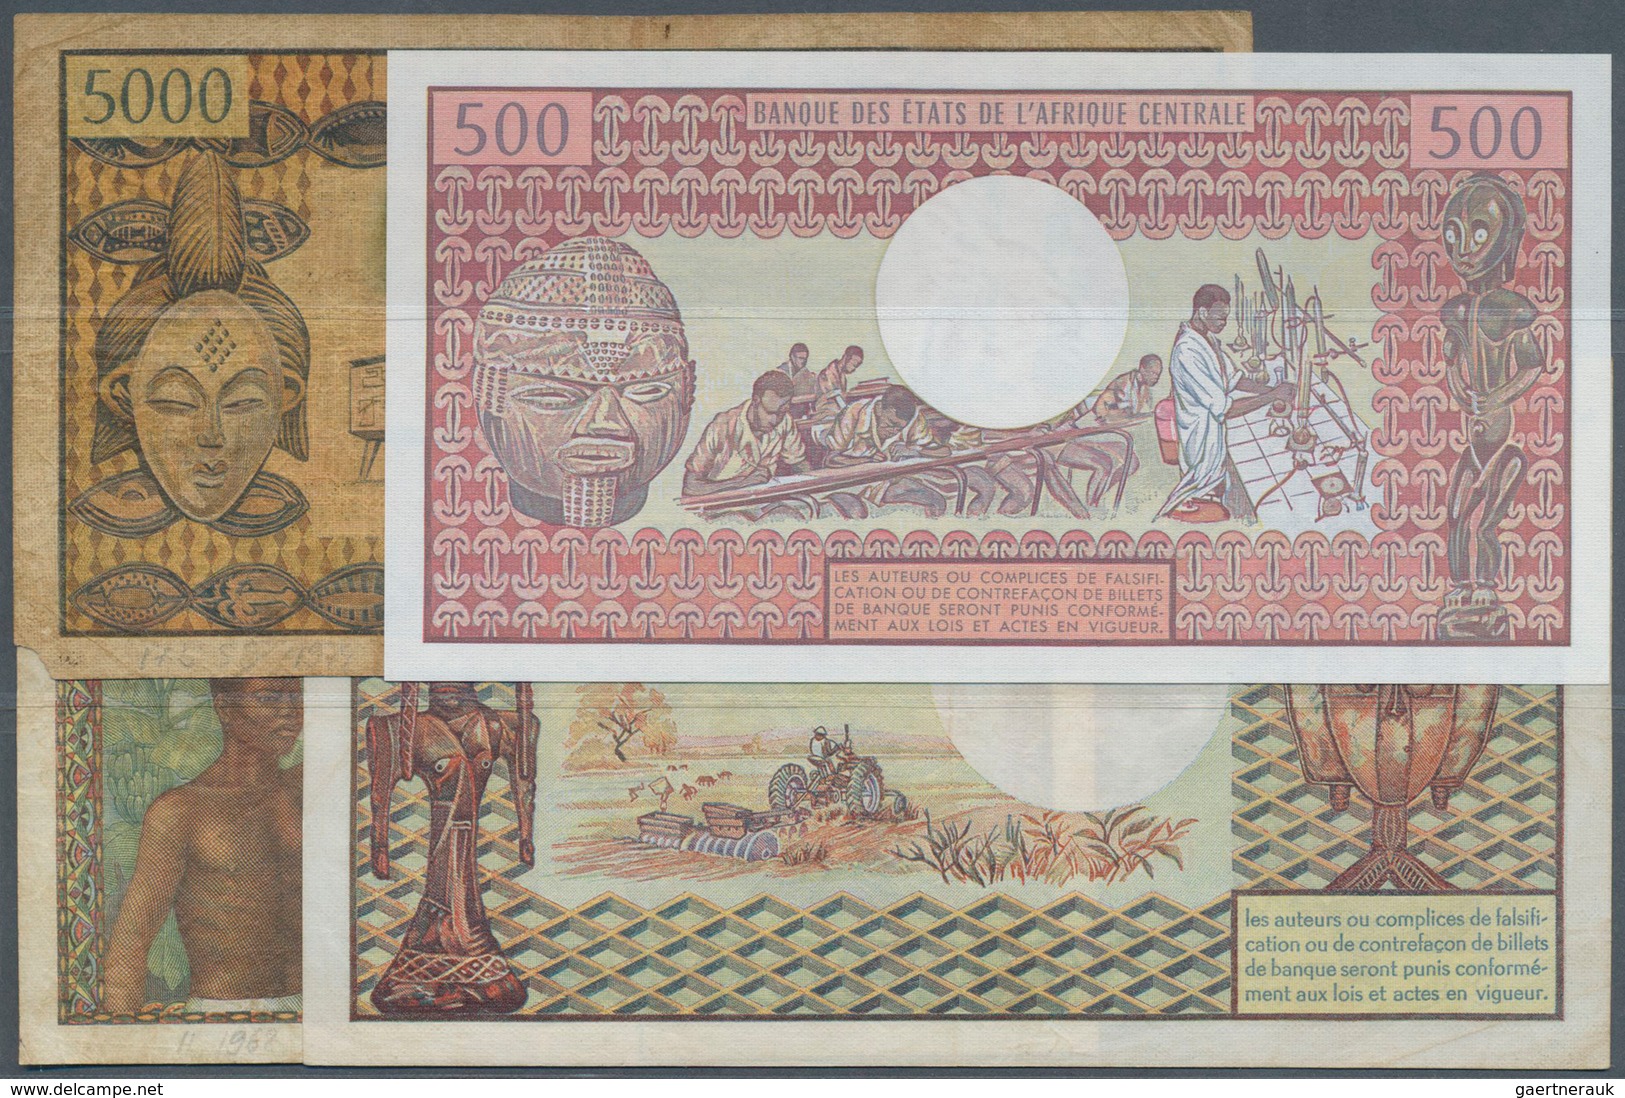 01245 Cameroon / Kamerun: Republique Federale Du Cameroun 500 Francs ND(1962) P.11 In F- And Republique Un - Cameroon